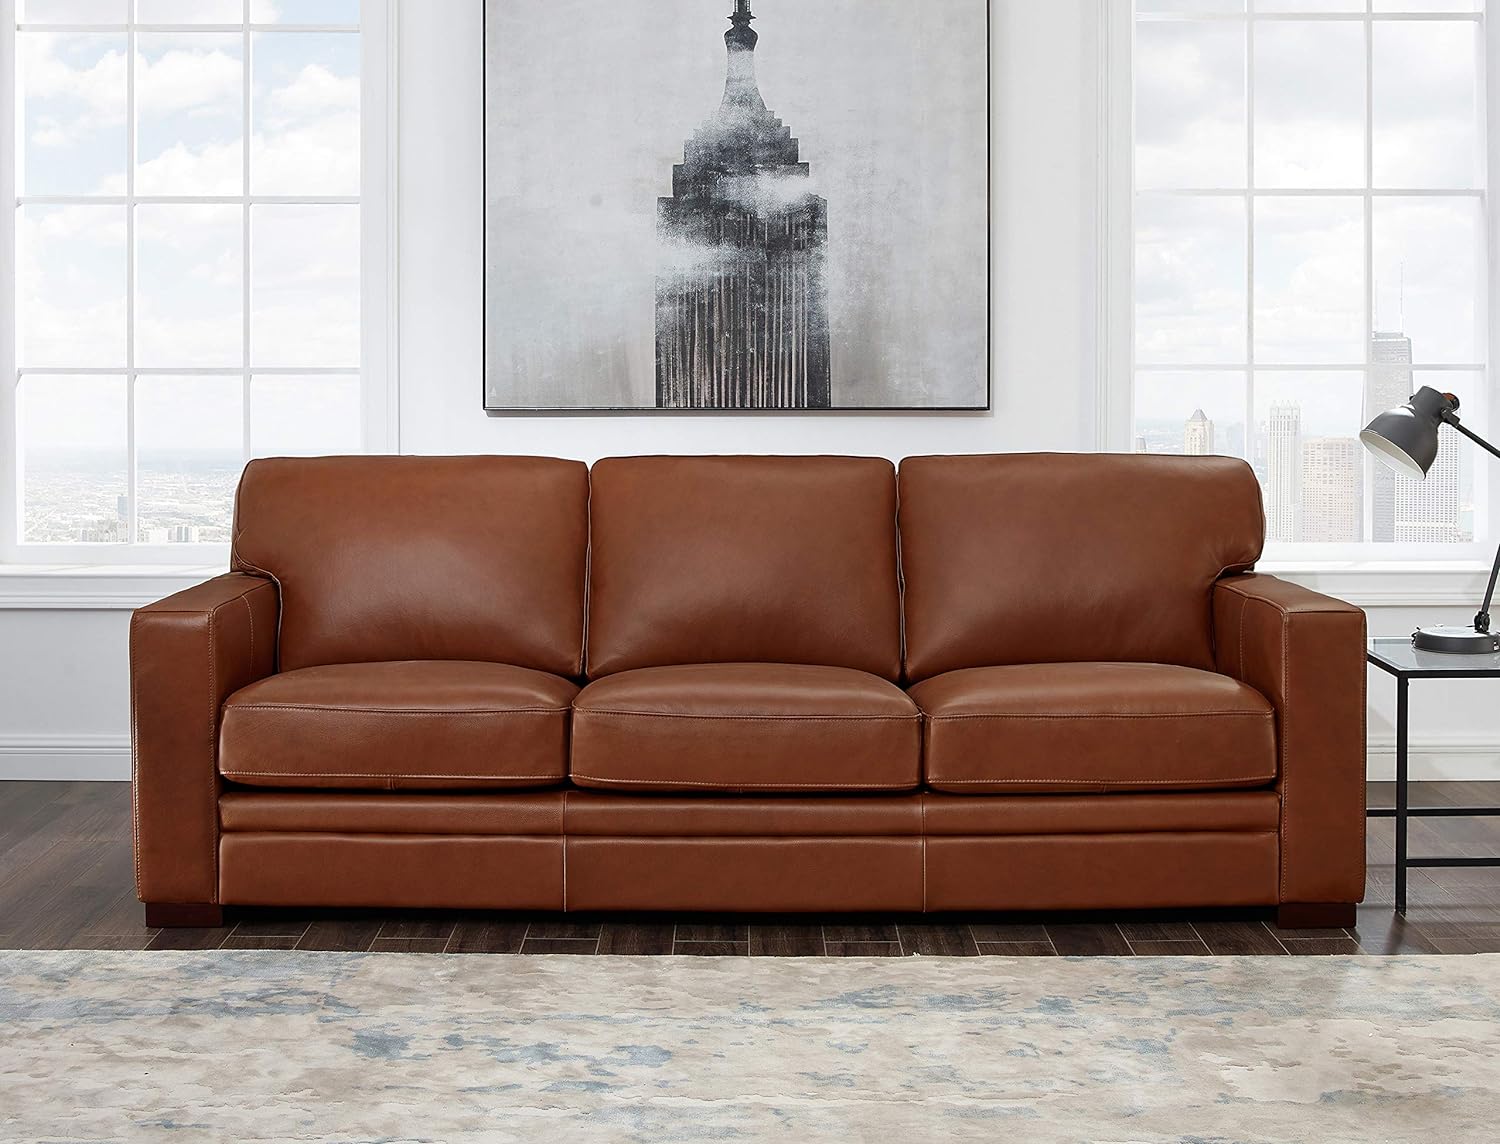 a luxury sofa making $200K/month online